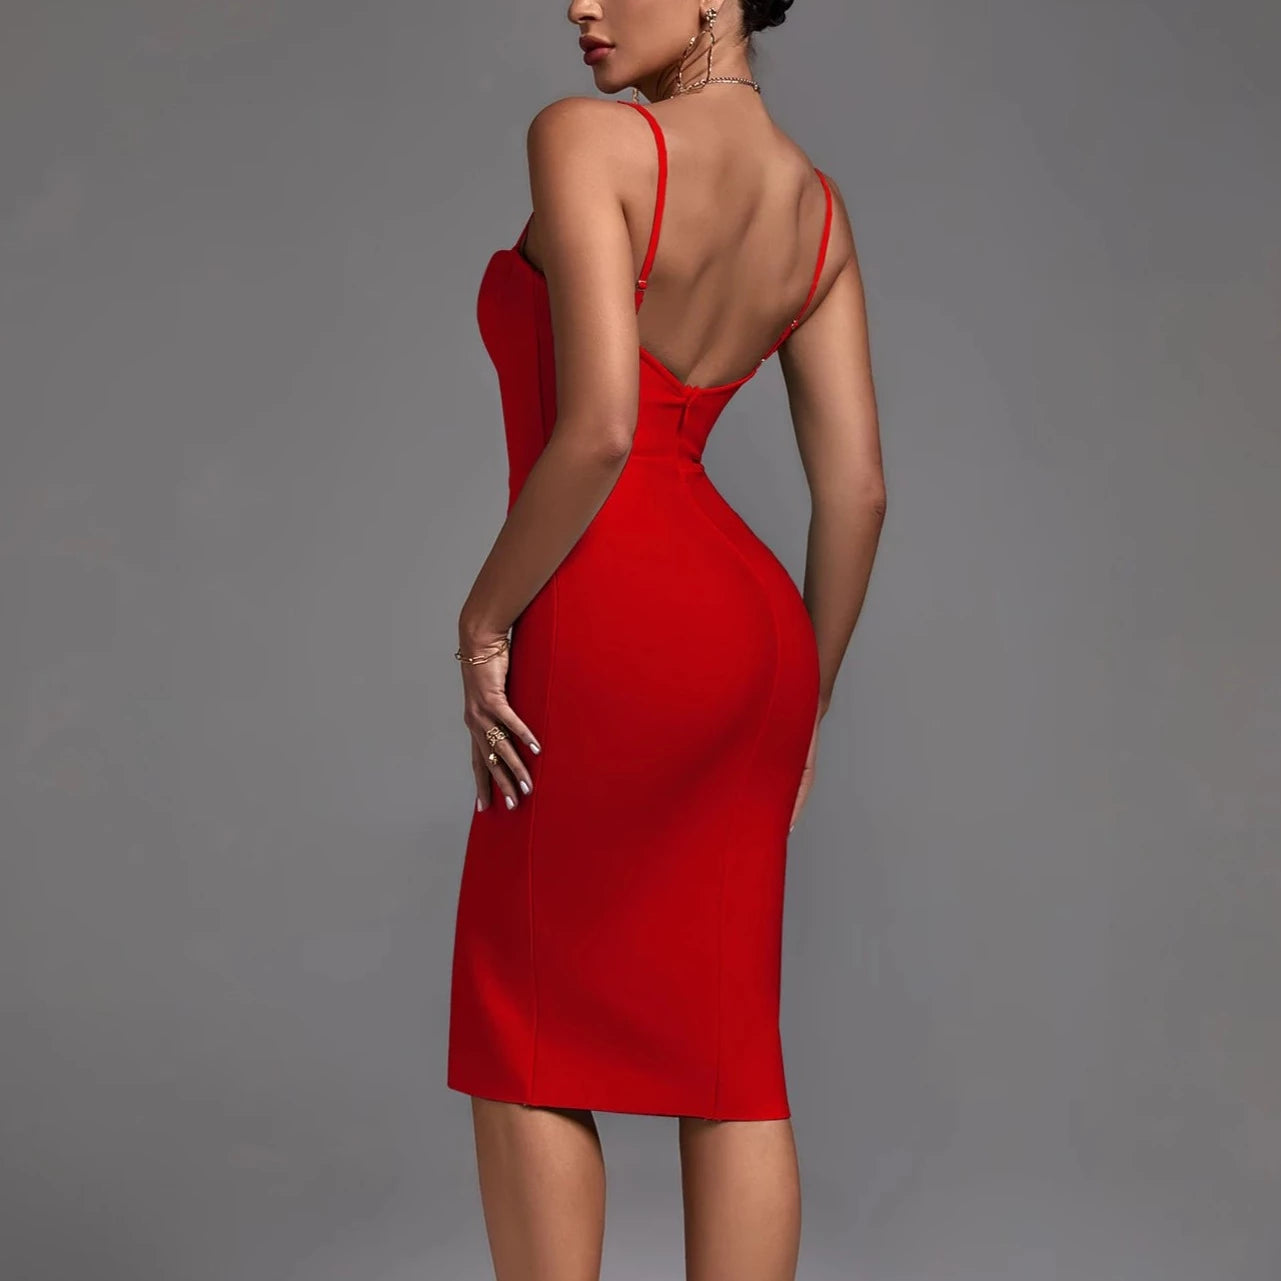 Alicia - Red Front Split Bandage Dress